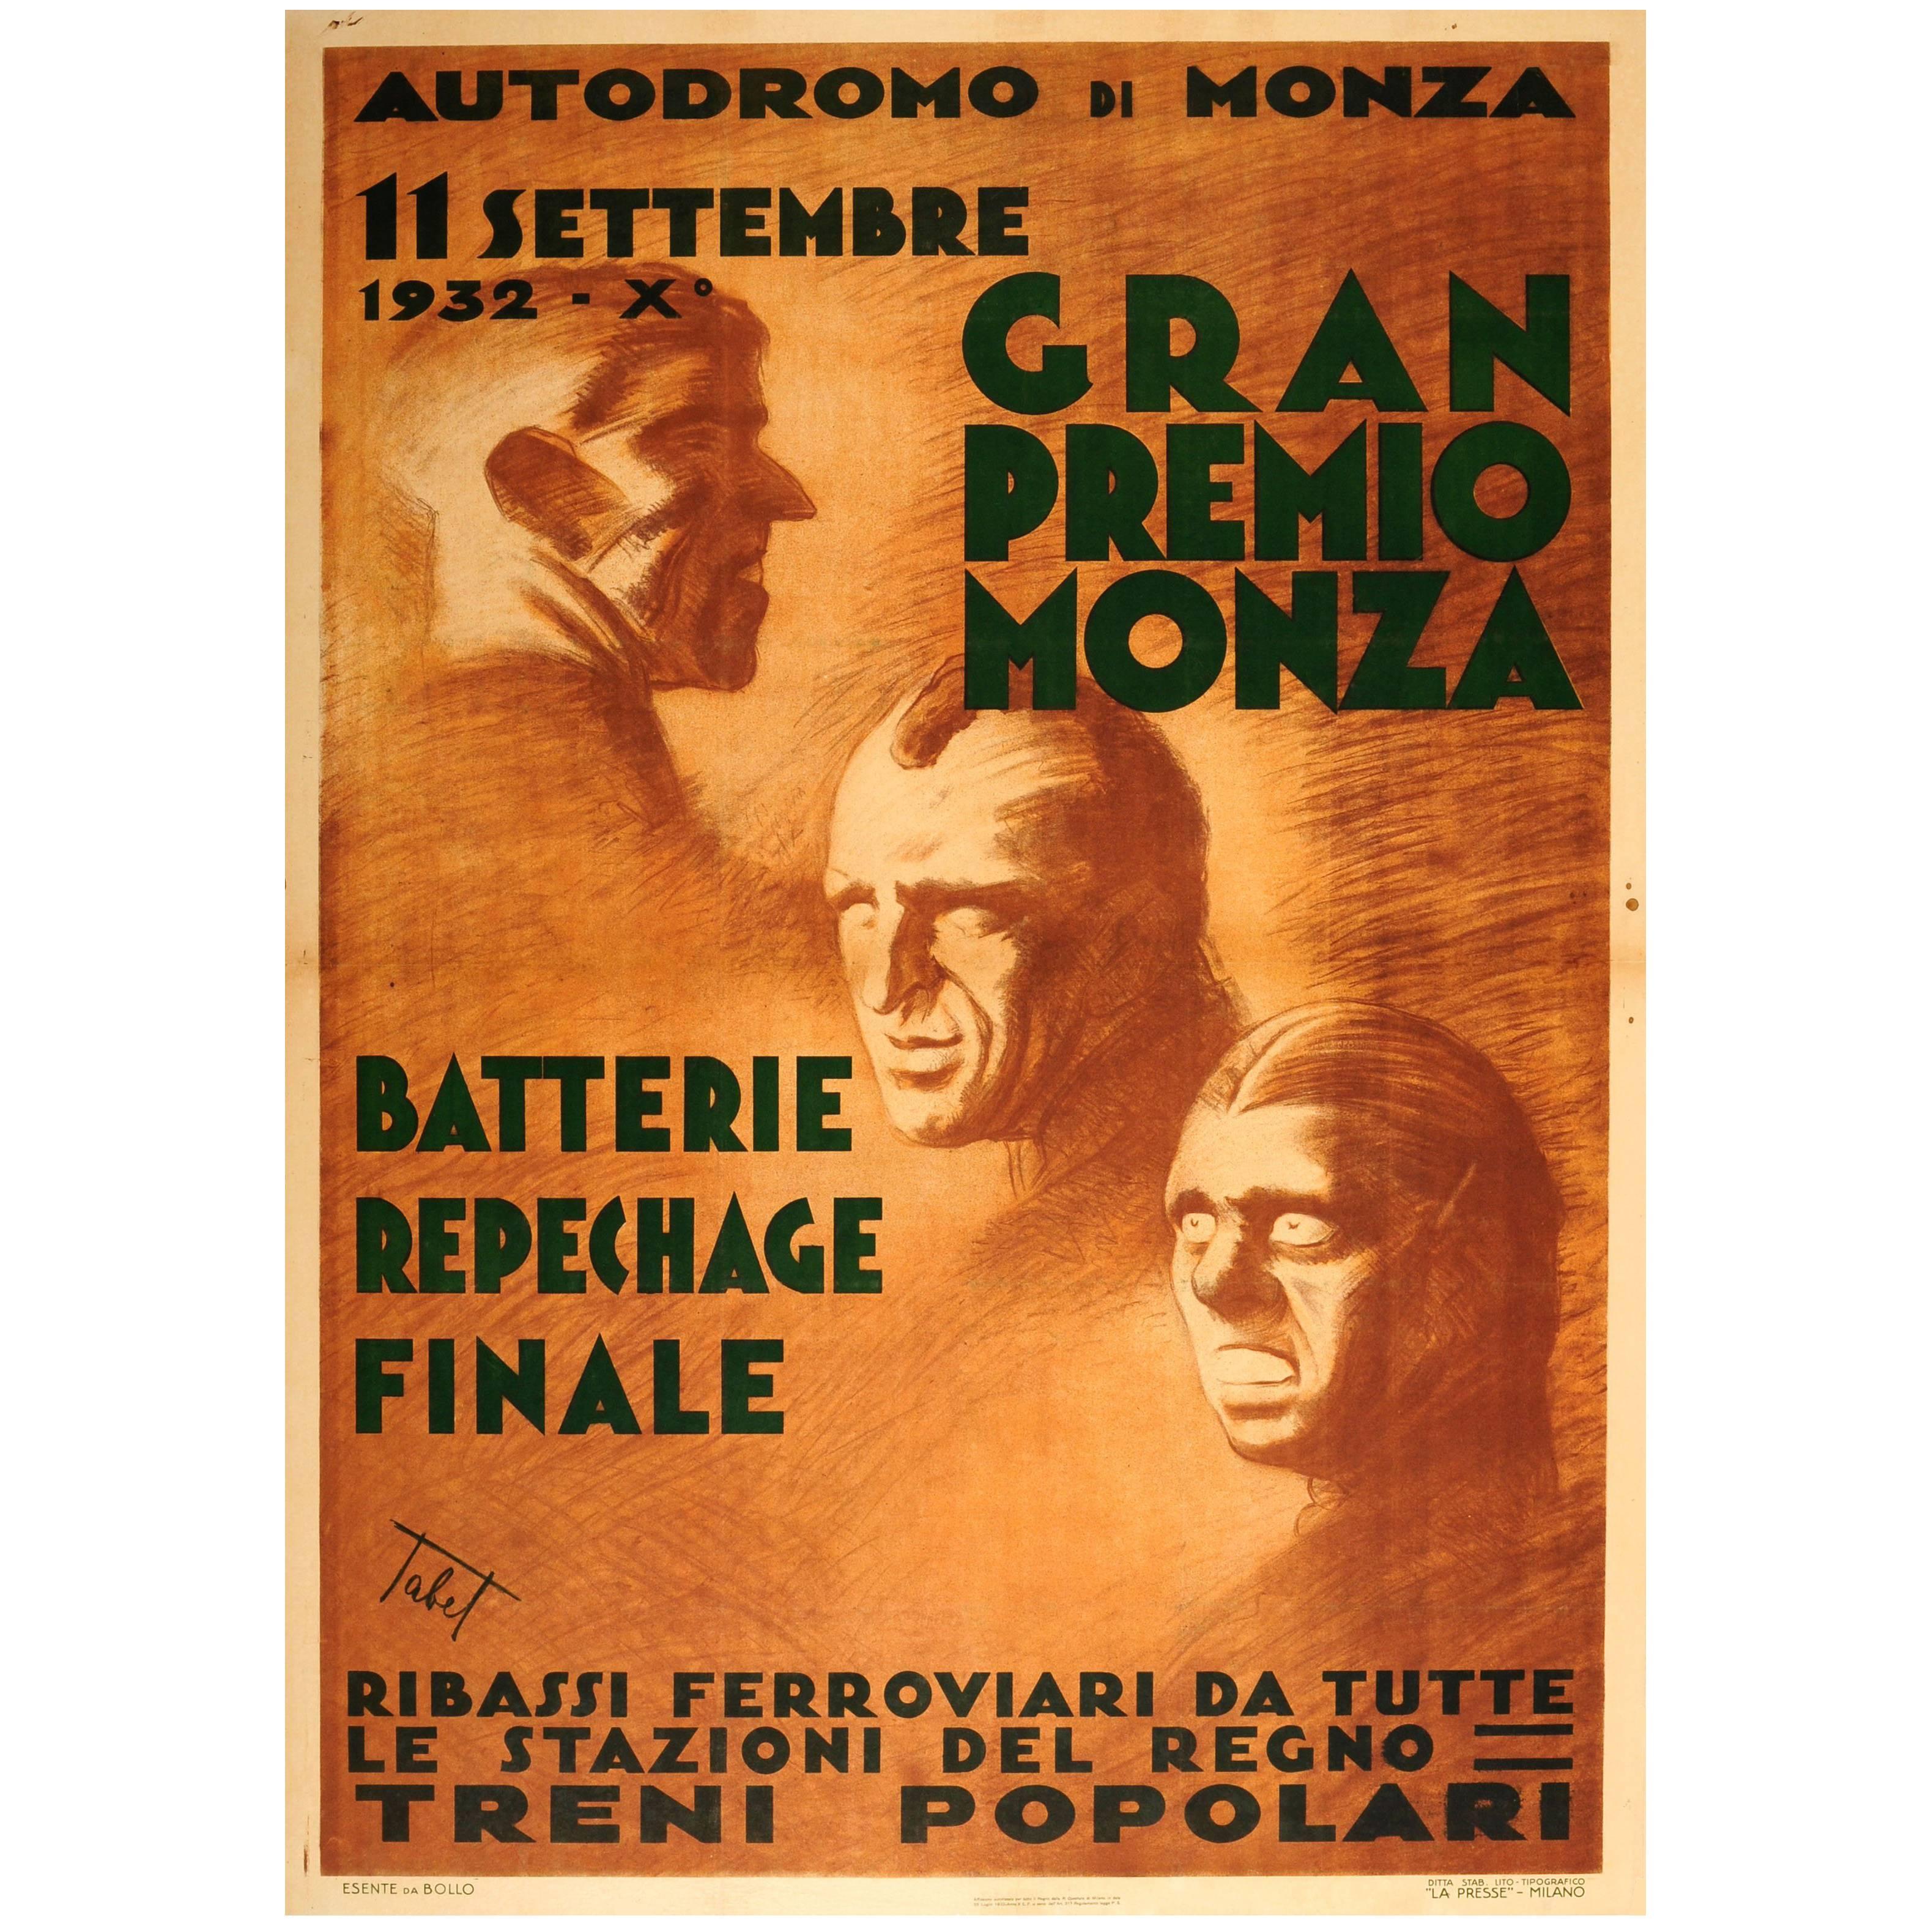 Original Vintage Formula One Car Racing Event Poster for the Monza Grand Prix